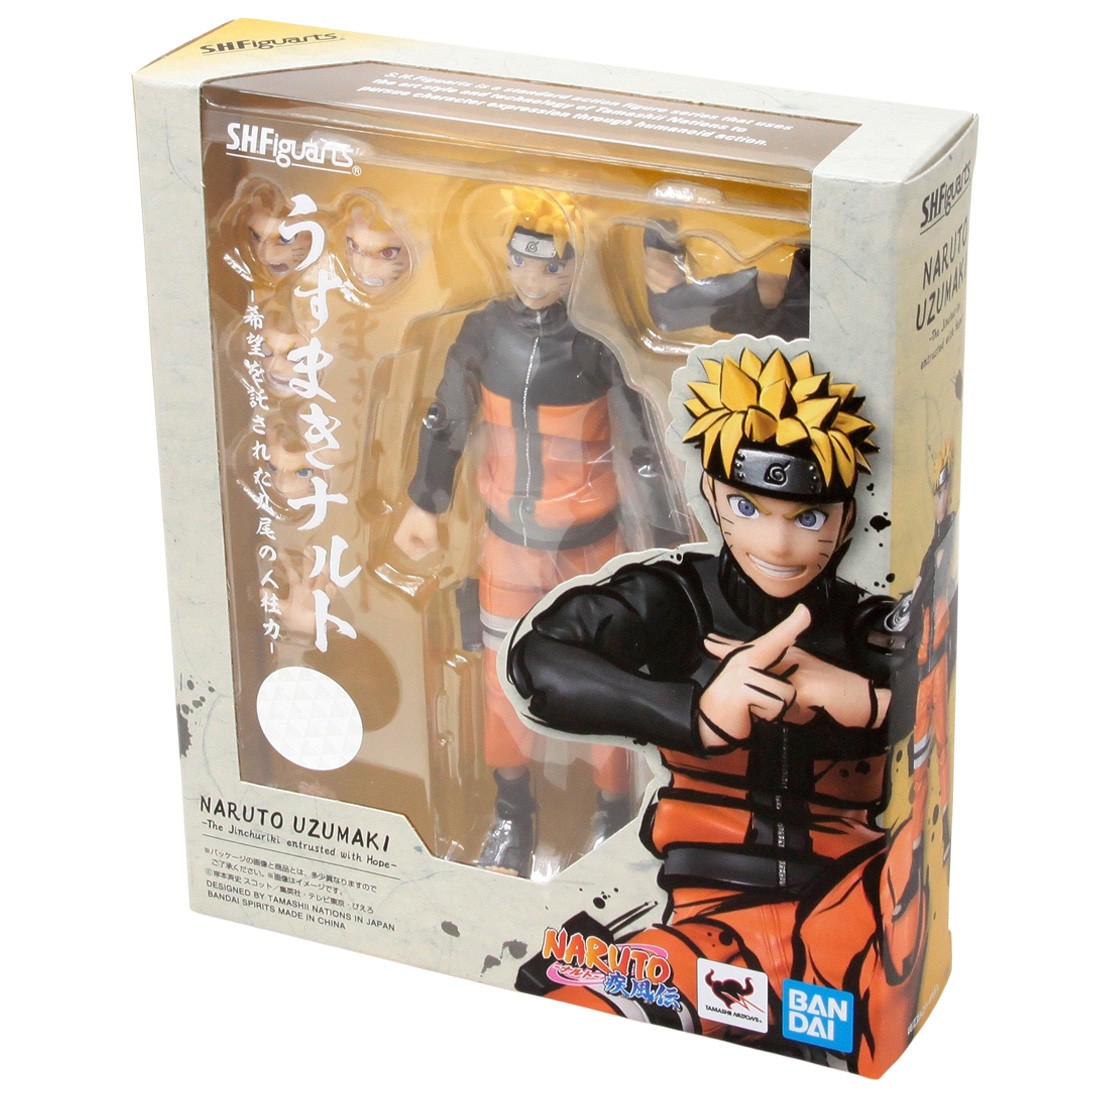 Uzumaki Naruto (The Jinchuuriki Entrusted with Hope) - S.H.